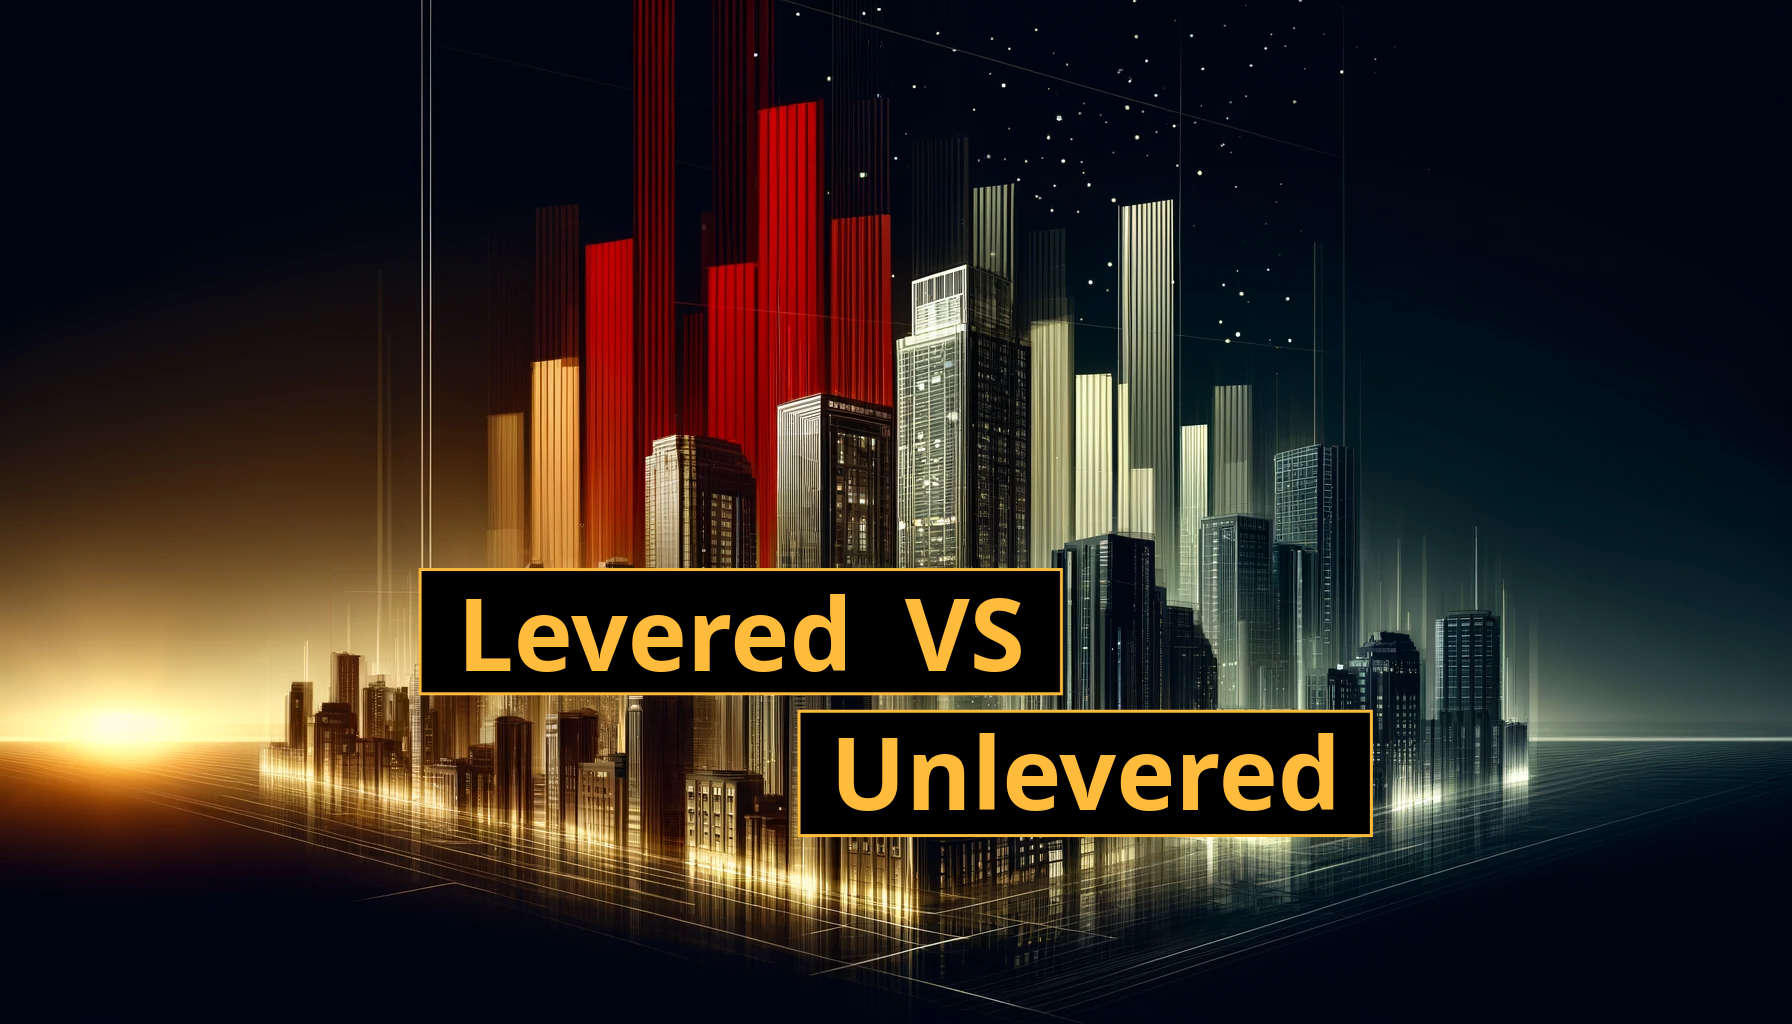 Levered_VS_Unlevered